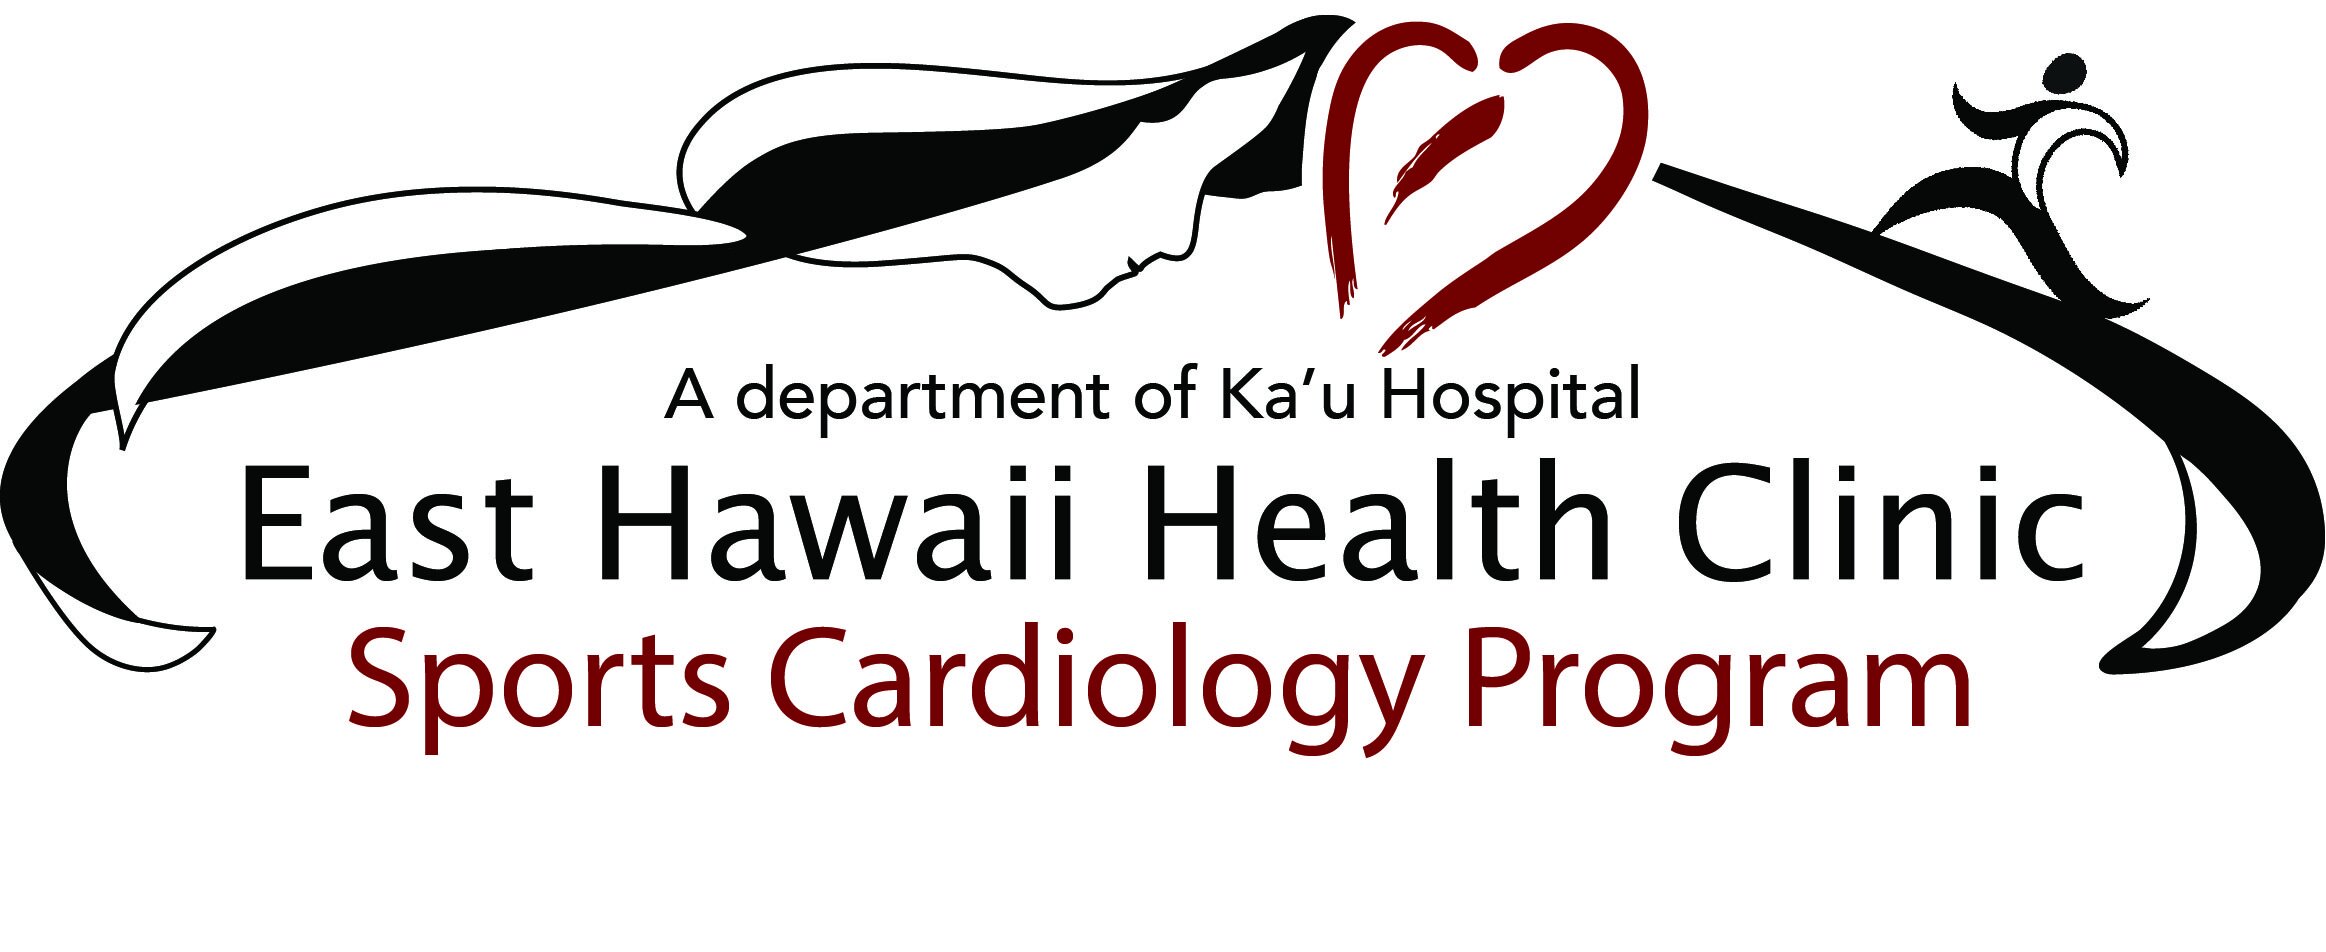 HMC Sports Cardiology Program.jpg